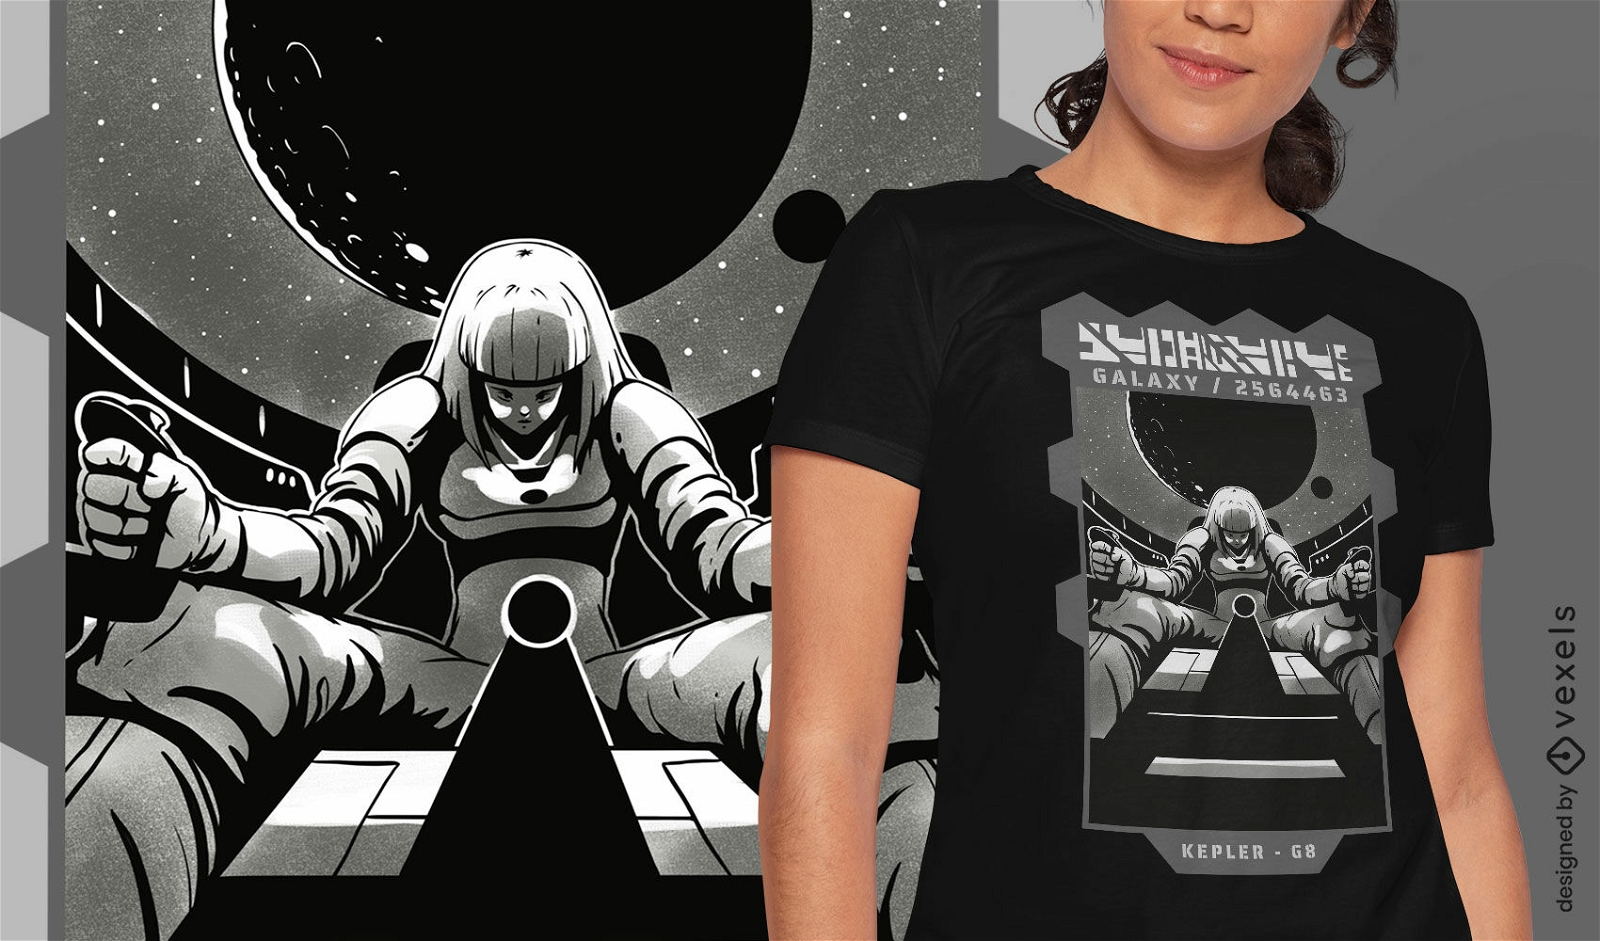 Spaceship astronaut t-shirt design